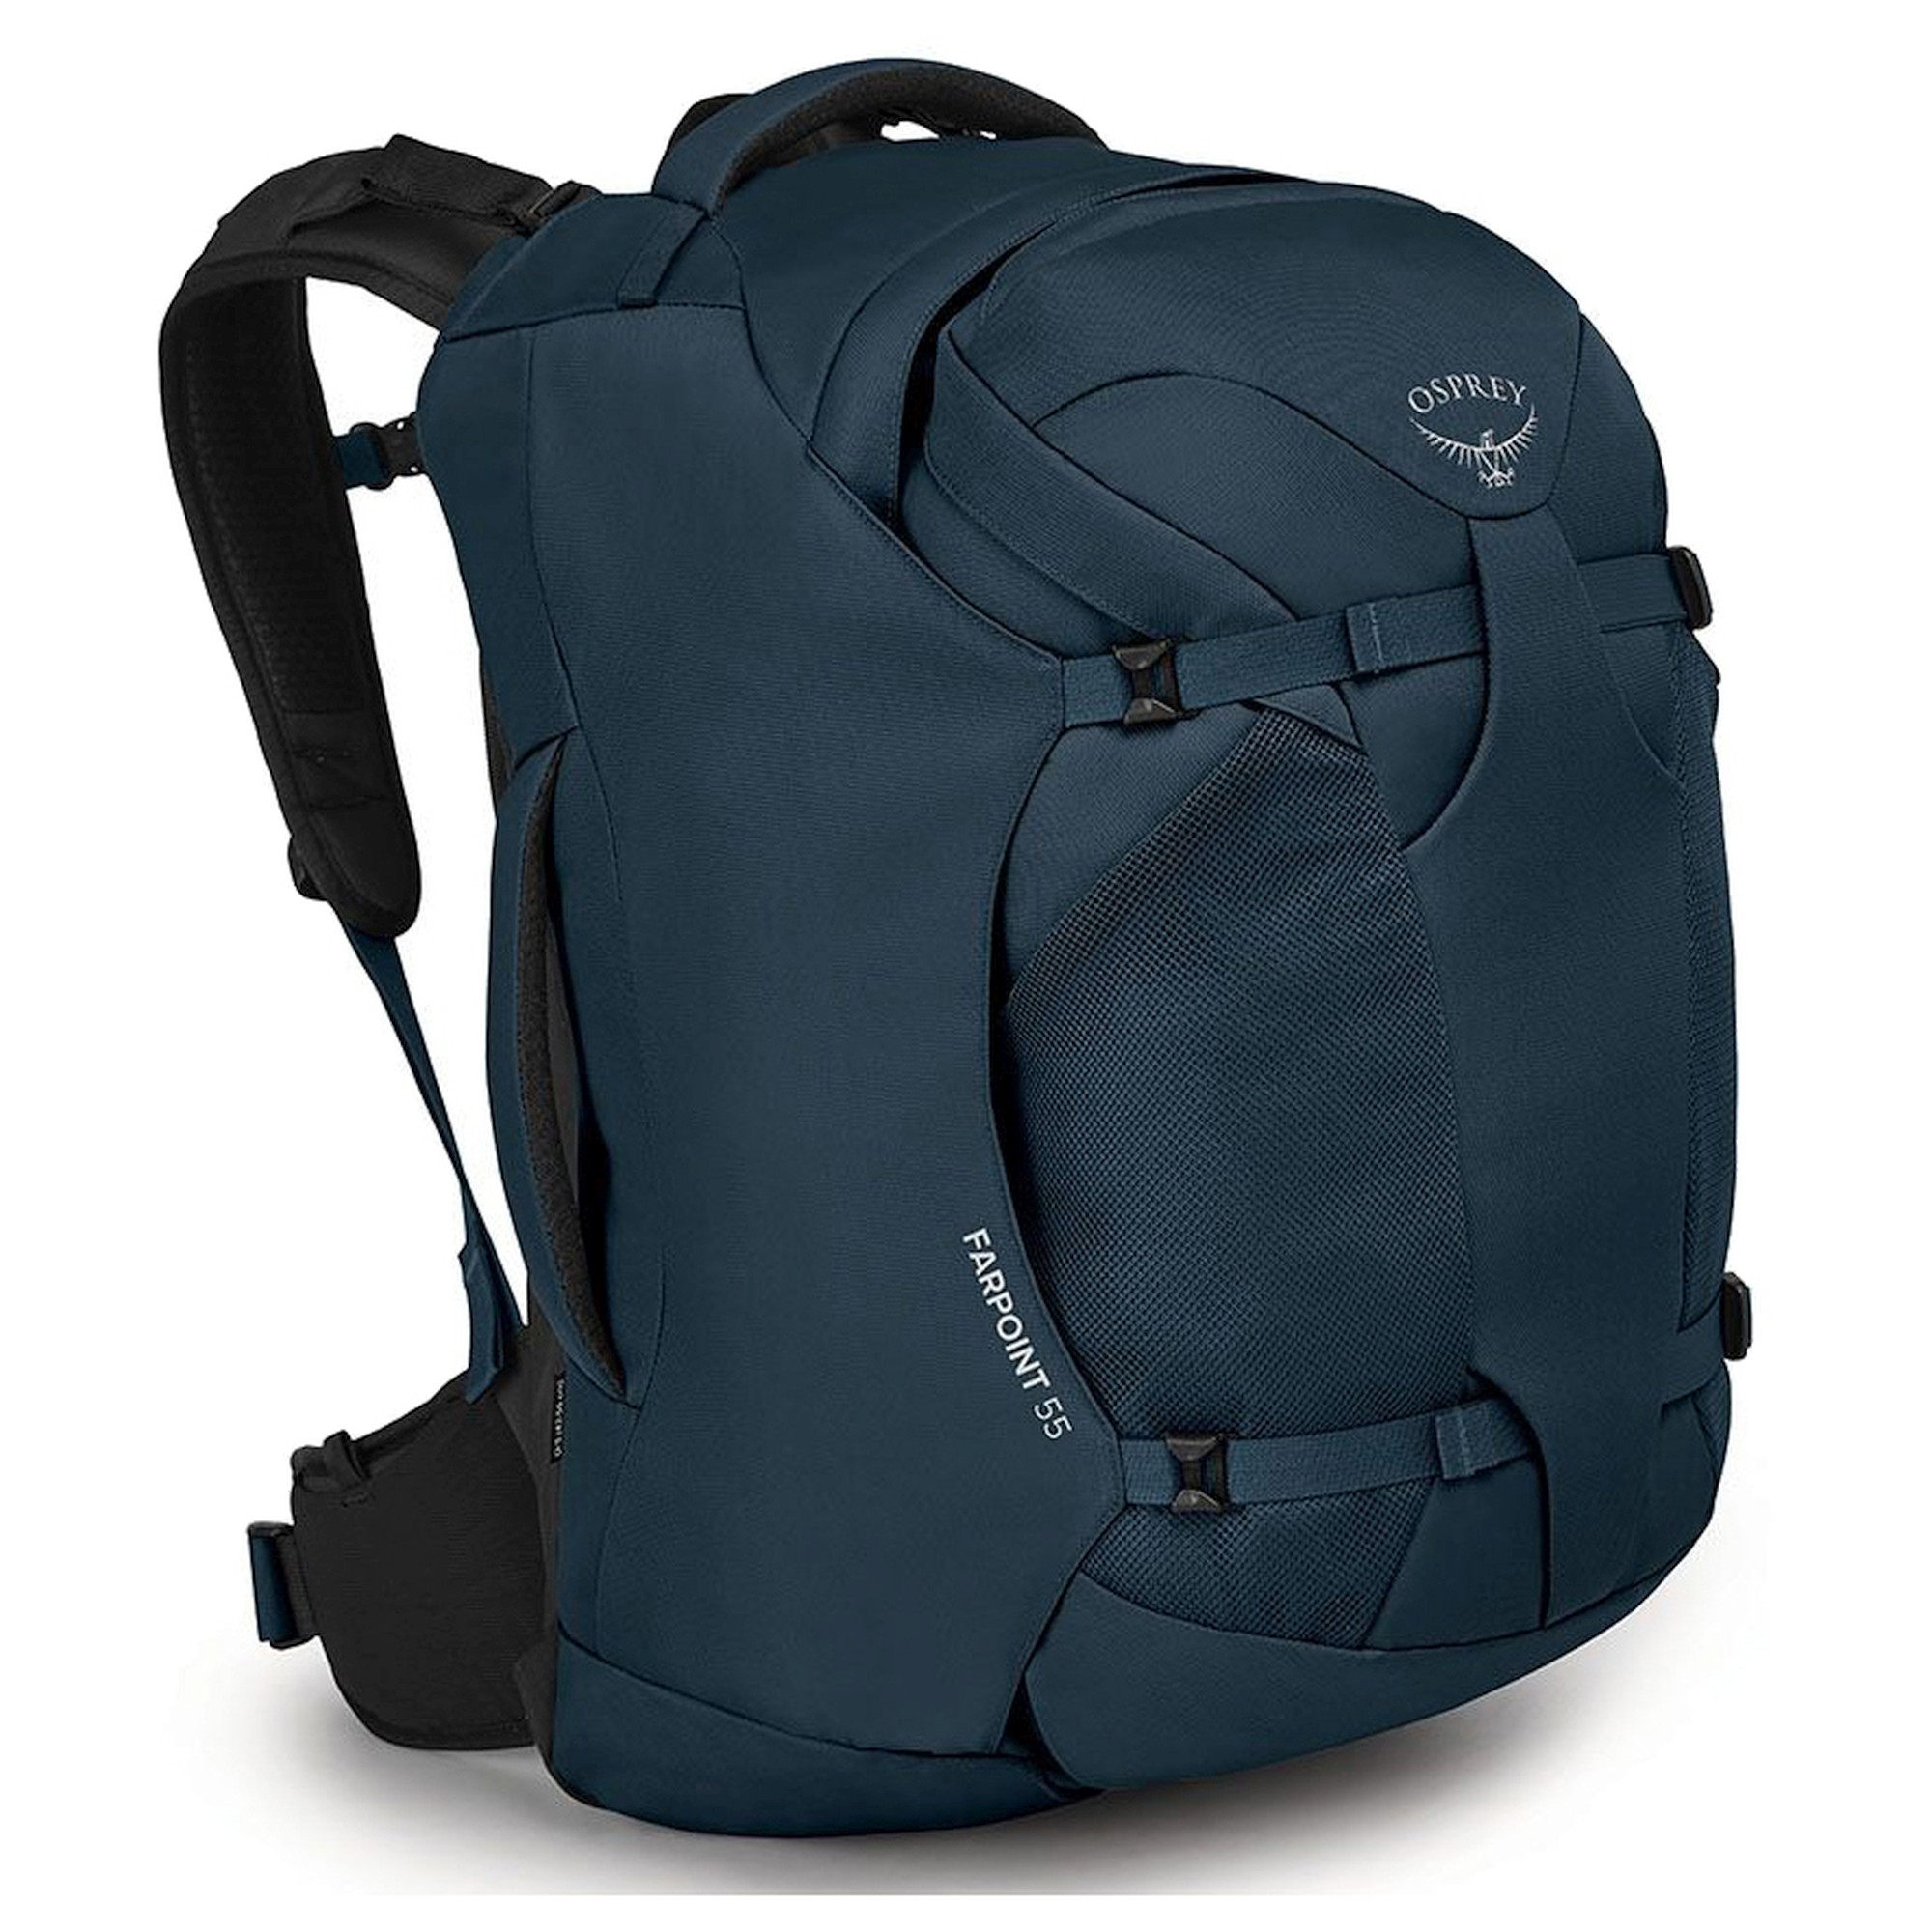 Рюкзак Osprey Farpoint 55 Reise 65 cm, цвет muted space blue туристический рюкзак sirrus osprey цвет muted space blue